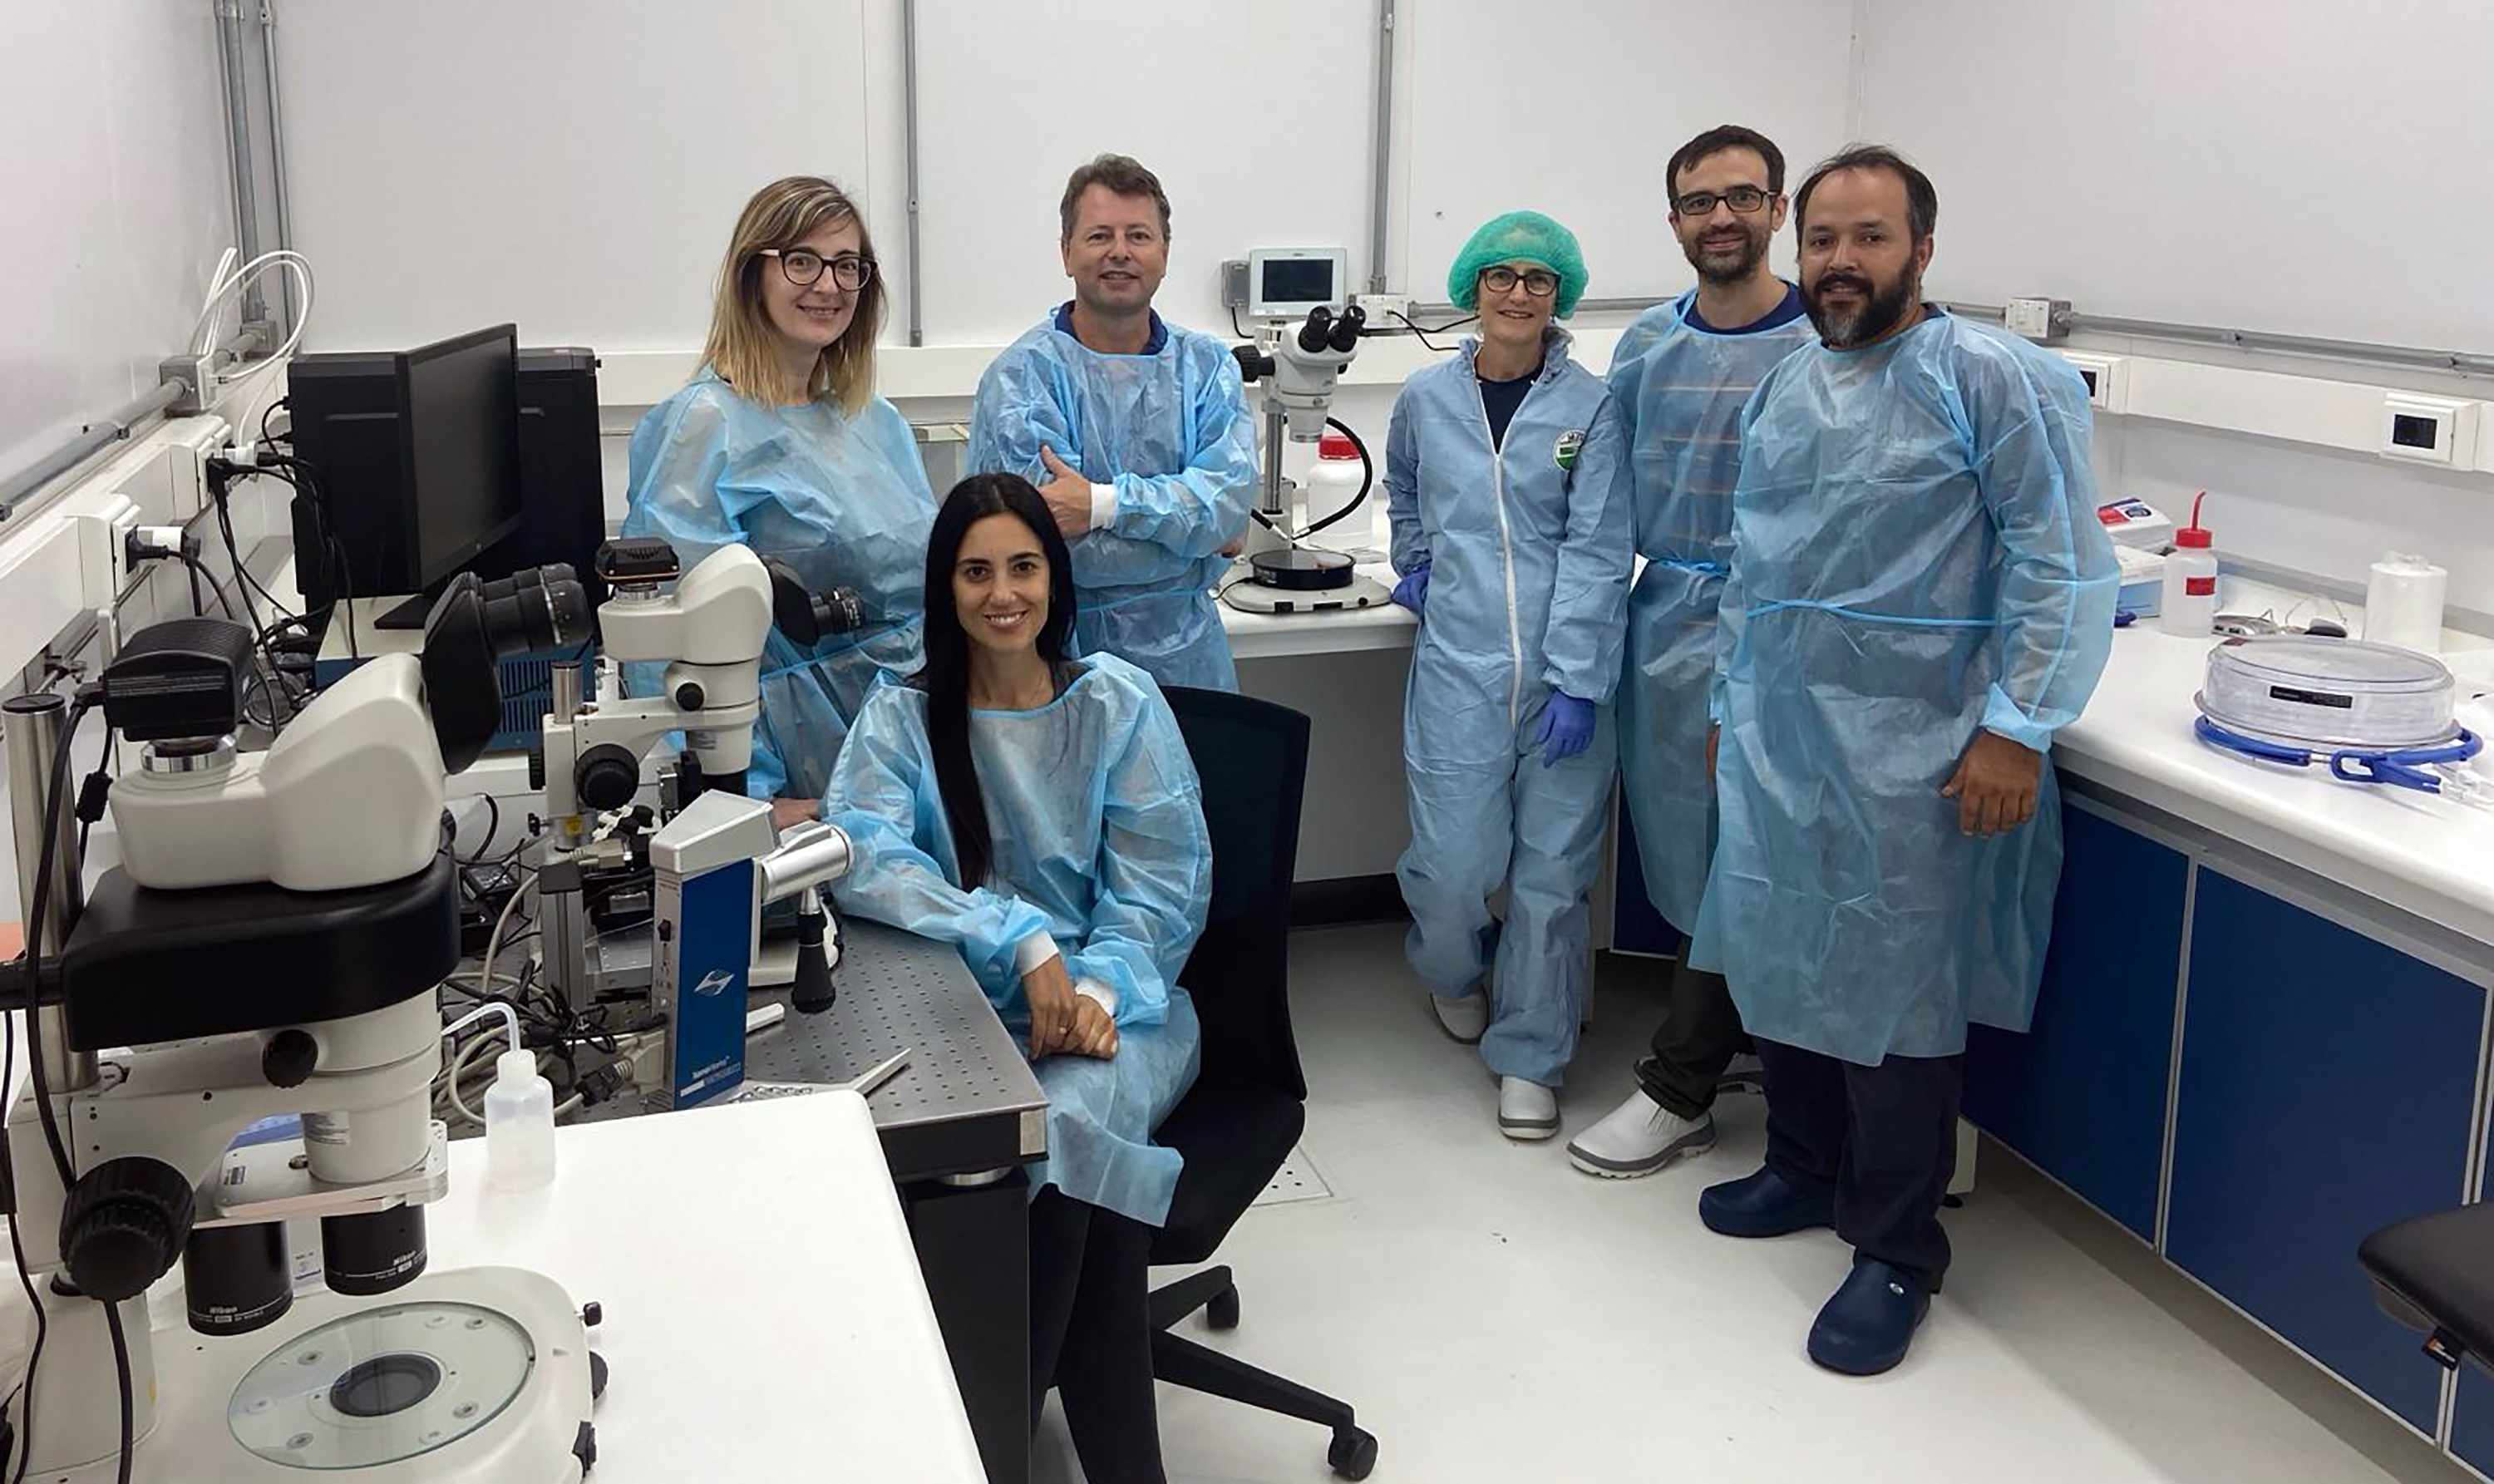 The scientific team in Uruguay poses in a lab.